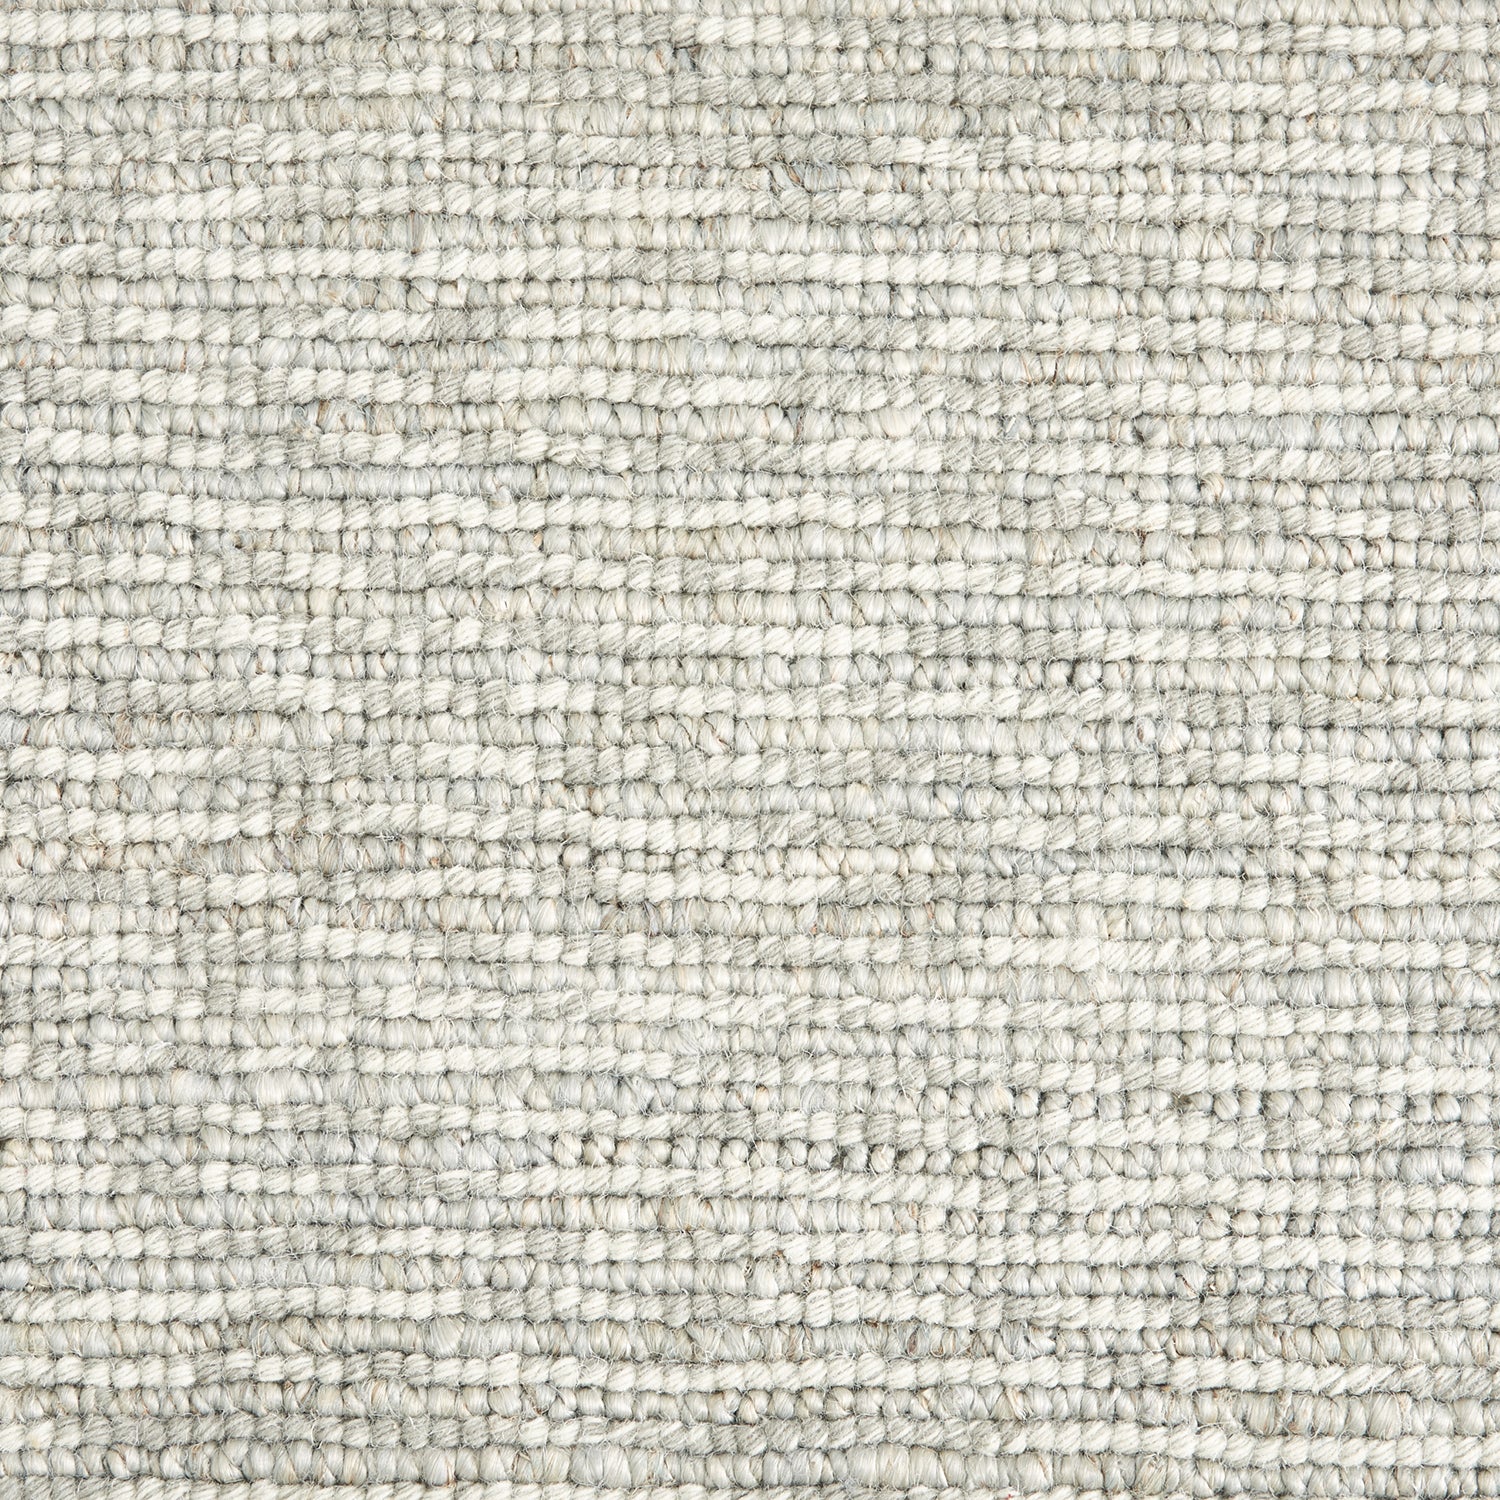 Wool broadloom carpet swatch in a striped light gray and cream weave pattern.